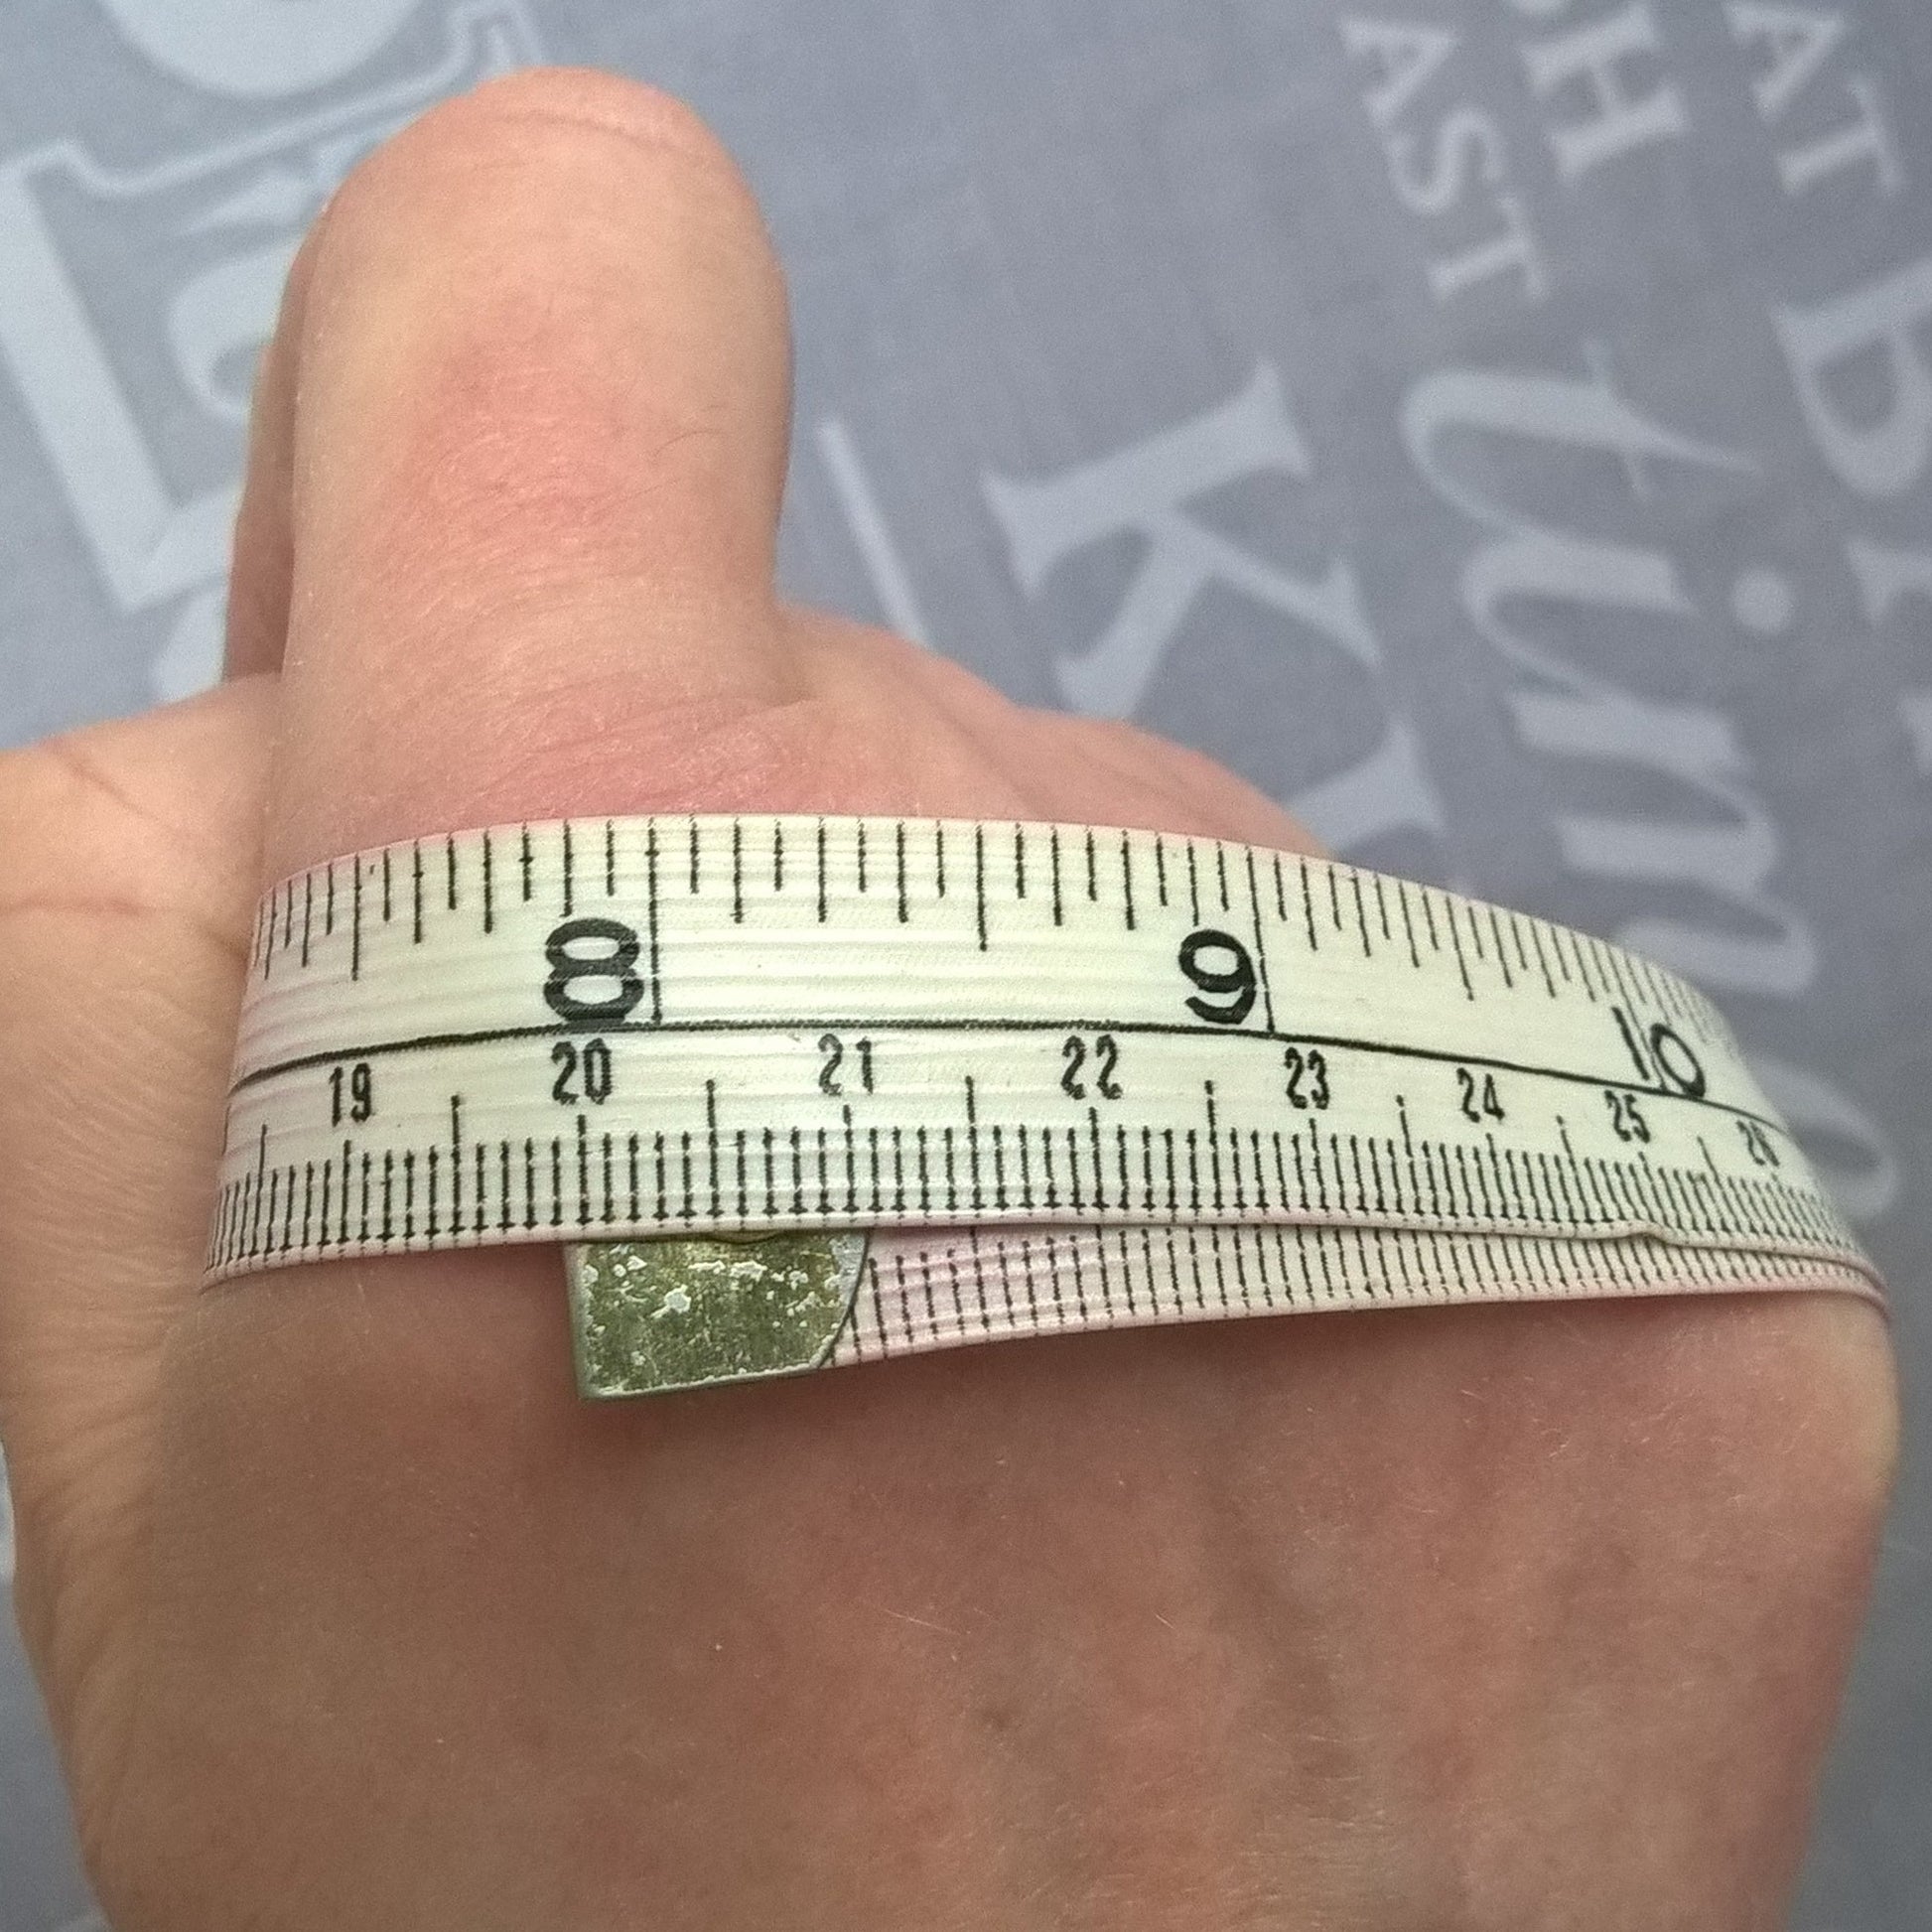 Measure around knuckles to determine size.